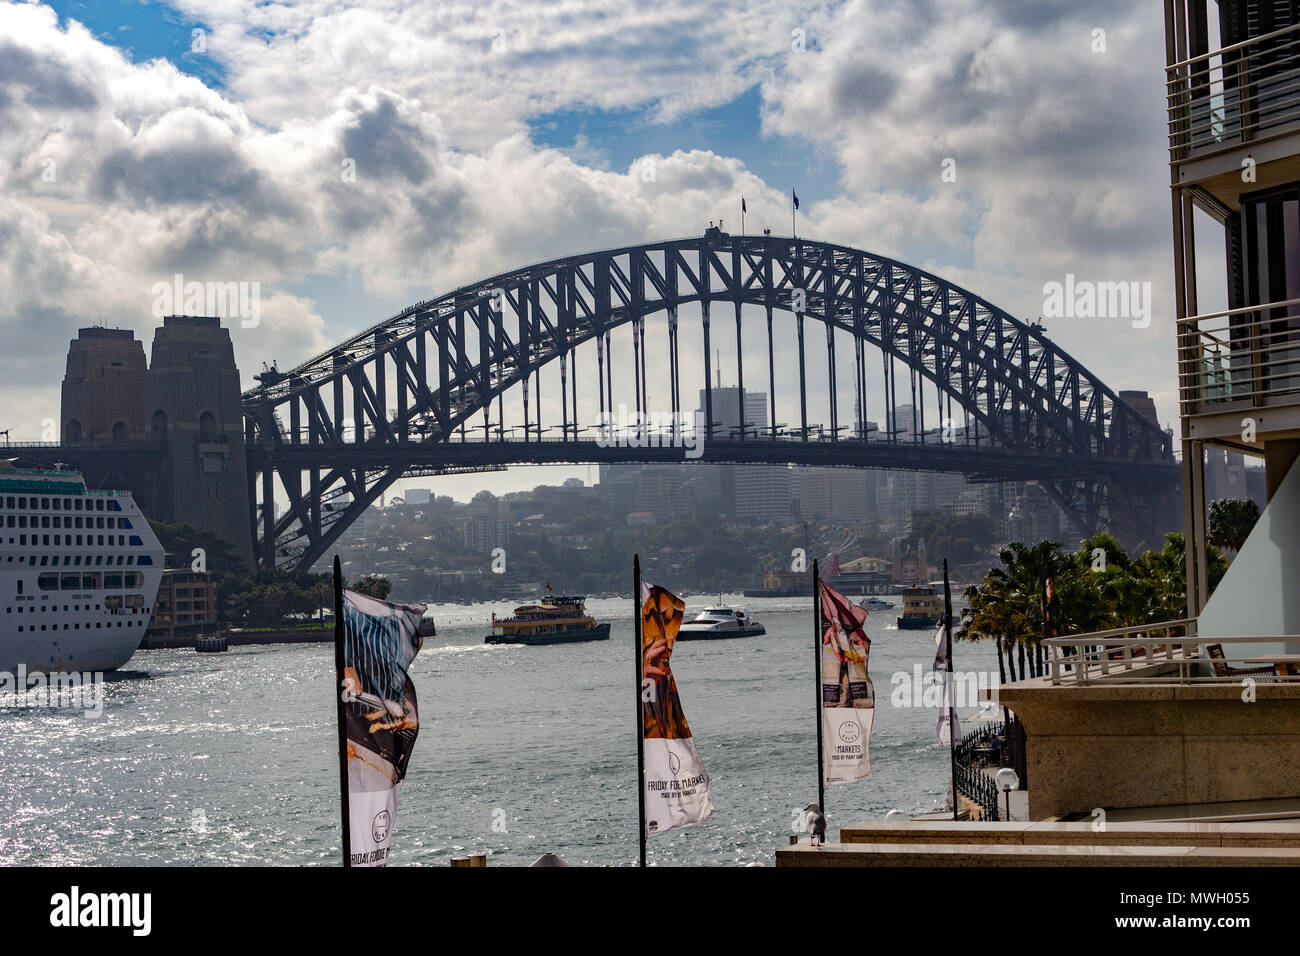 The Sydney Harbour Bridge from across the harbour Stock Photo